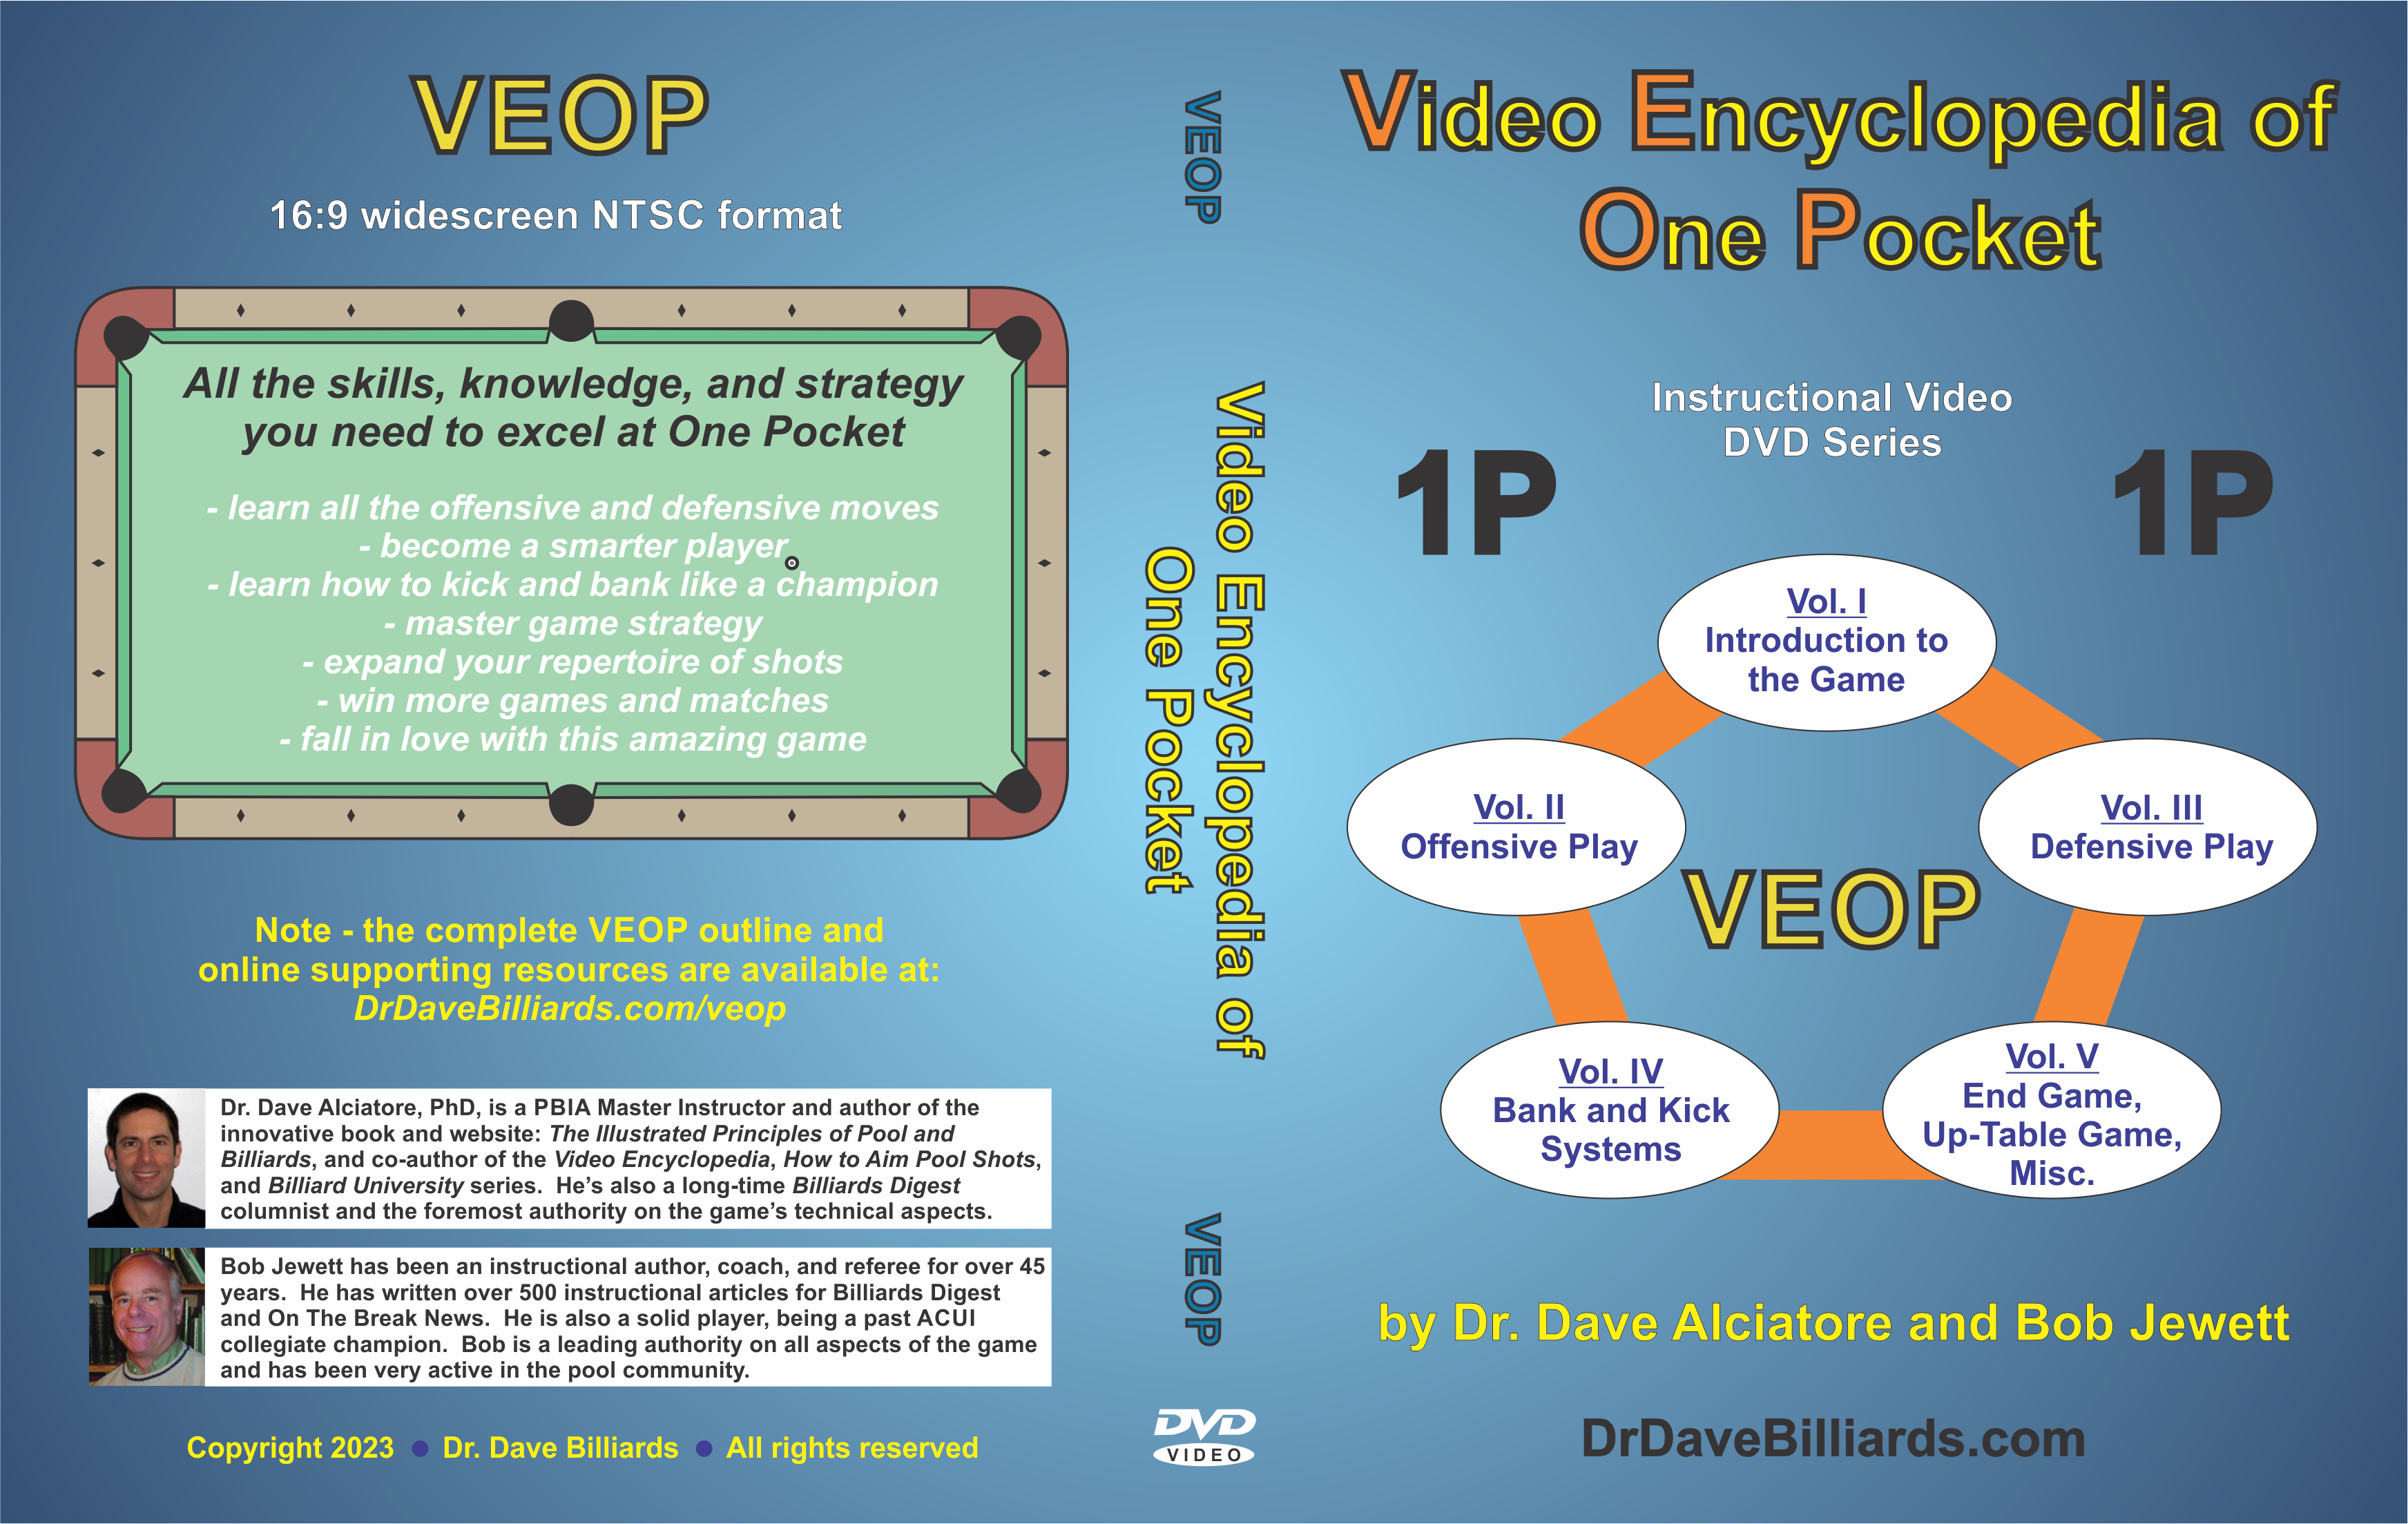 VEOP case cover art